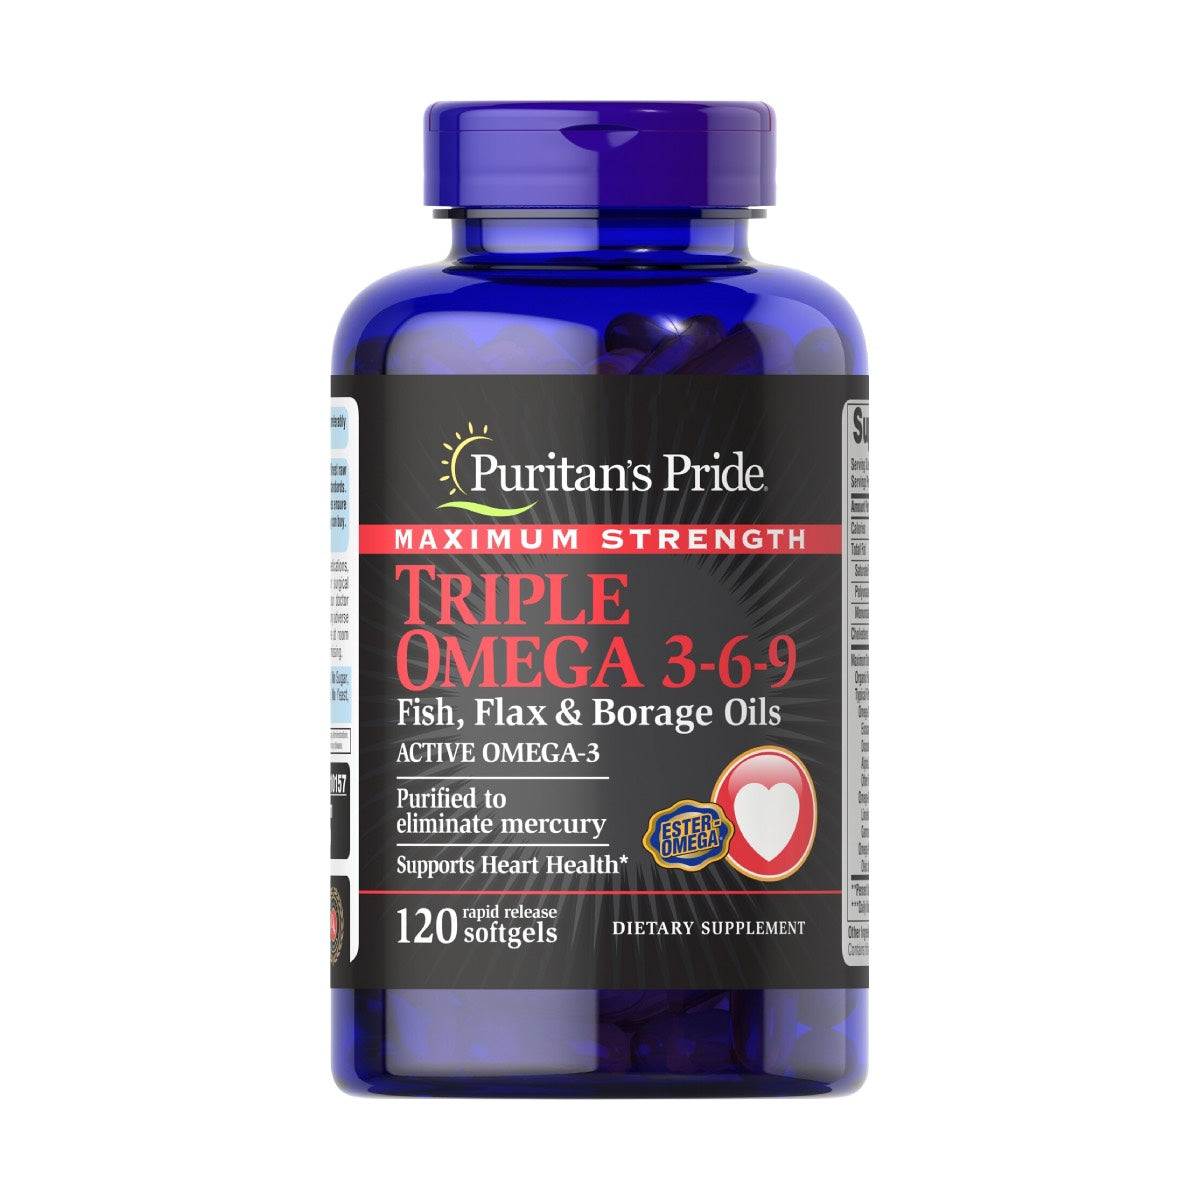 Puritan's Pride, Maximum Strength Triple Omega 3-6-9 Fish, Flax & Borage Oils